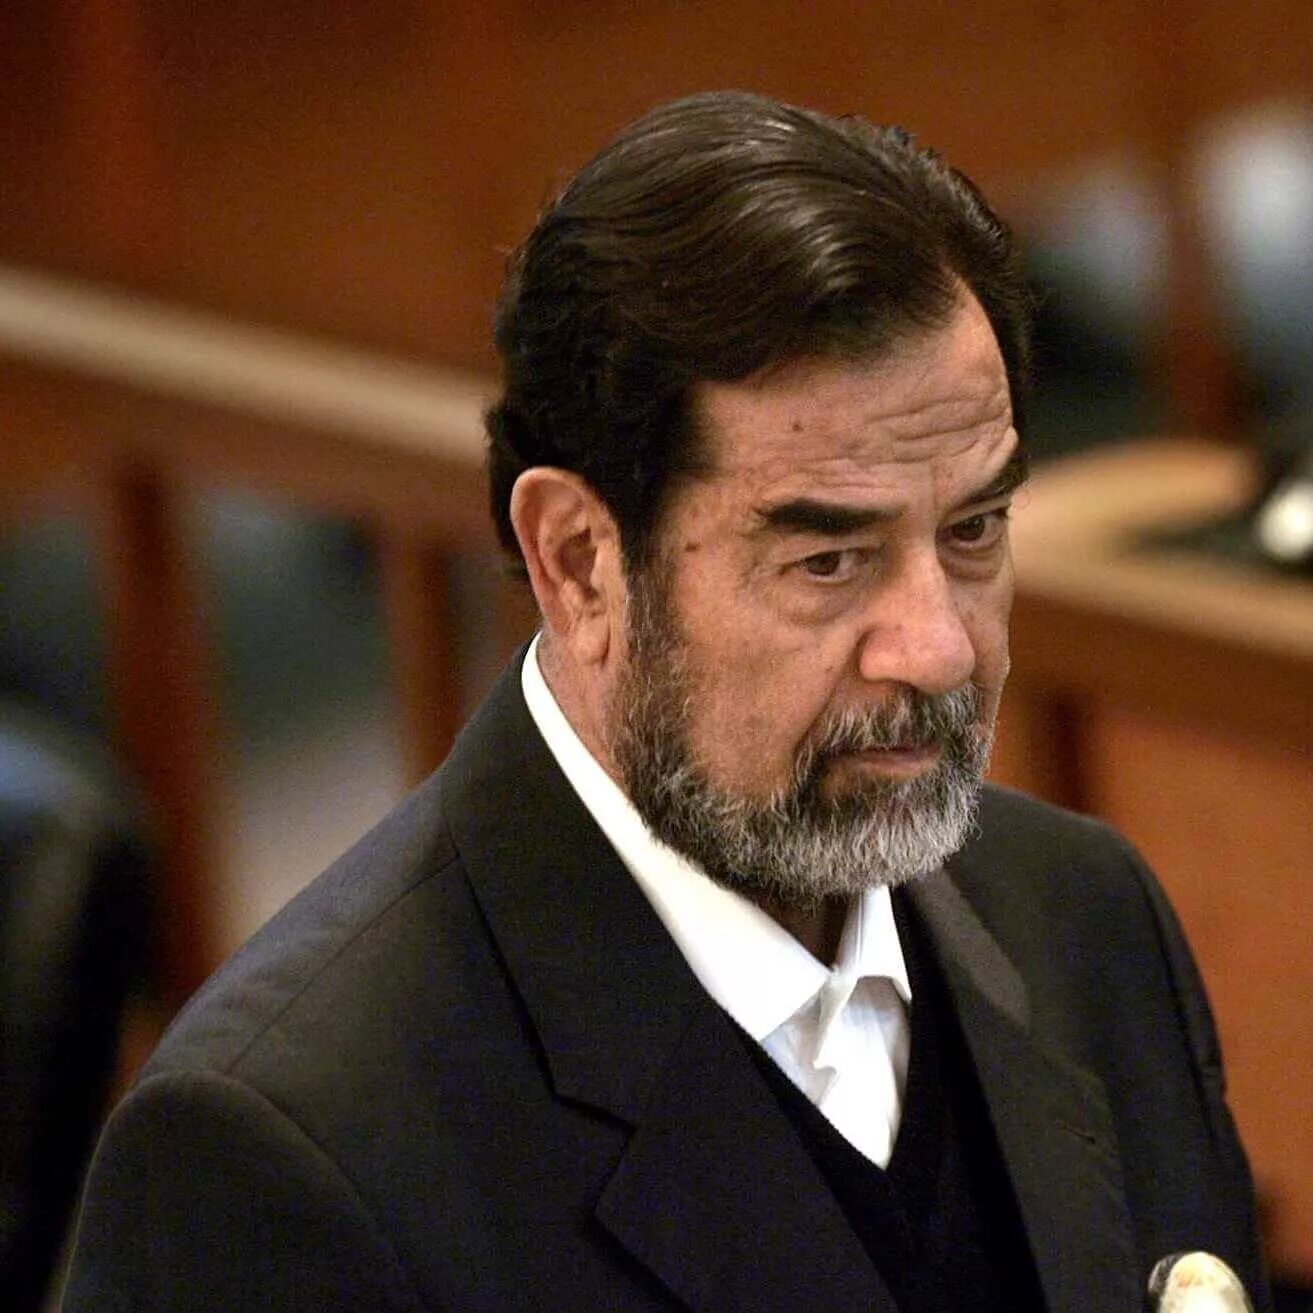 Саддам Хусейн 2006. Саддам Хусейн 2003. Саддам Хусейн 1979 Ирак.